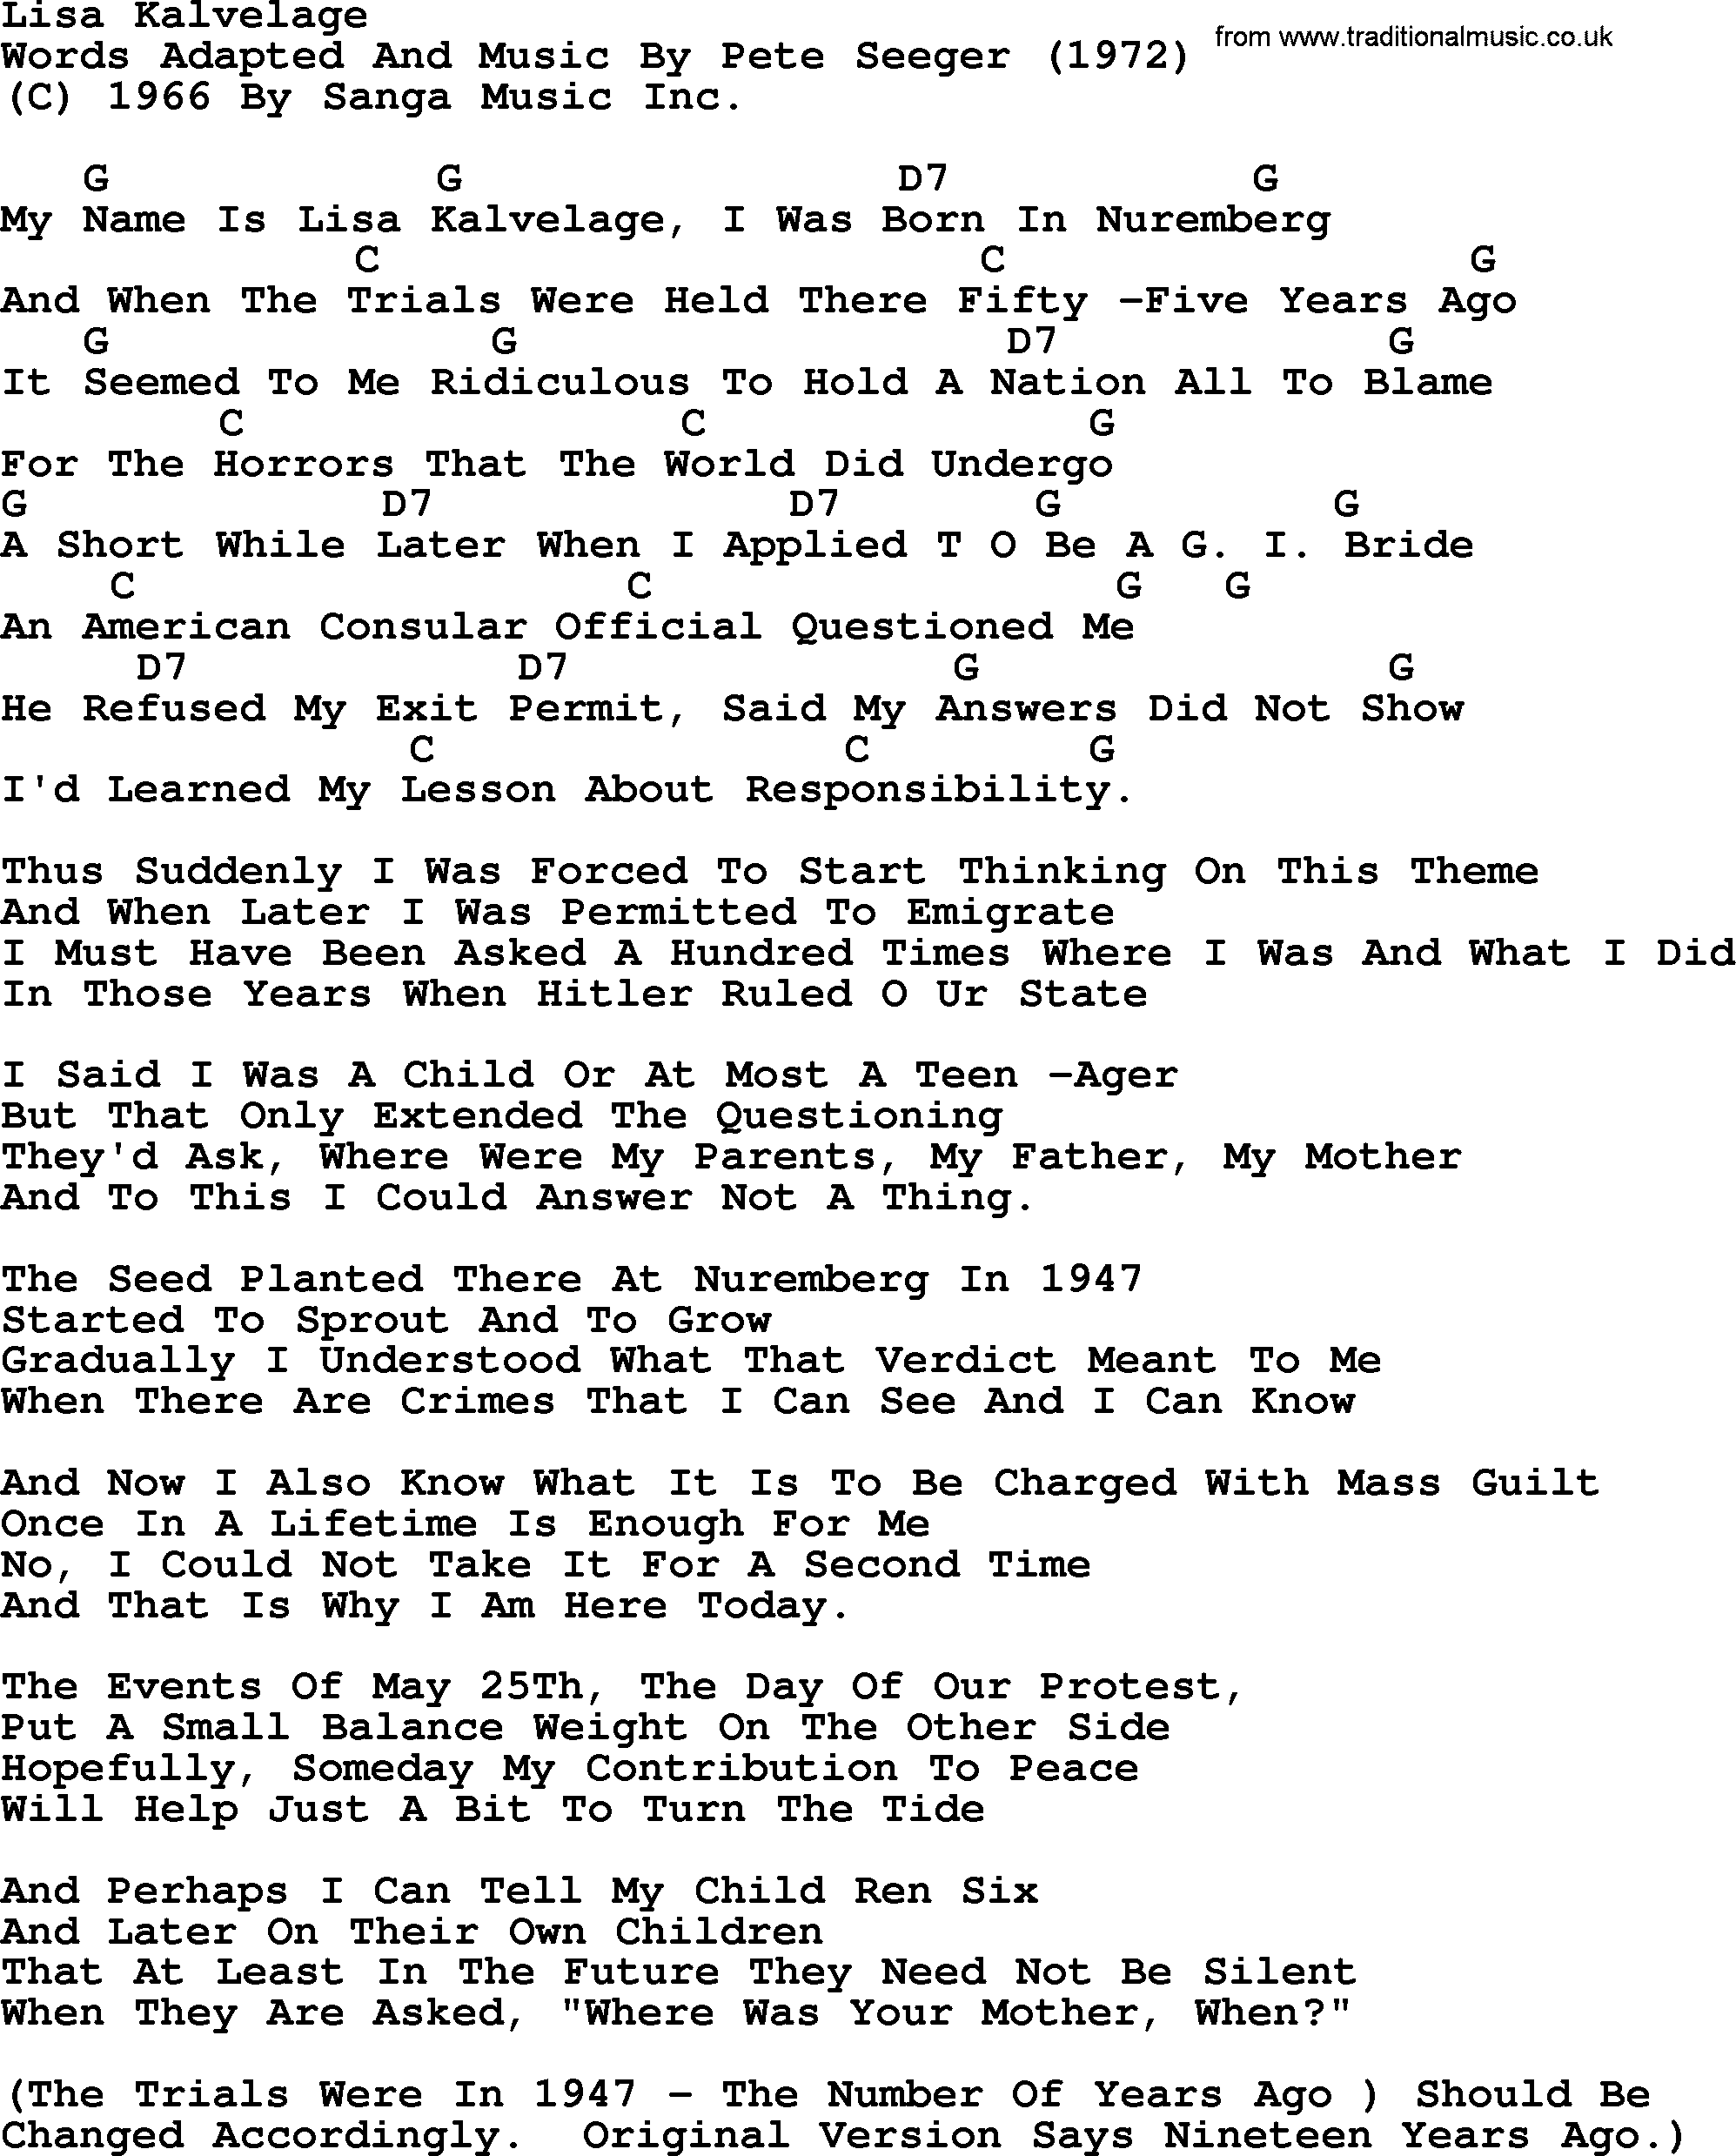 Pete Seeger song Lisa Kalvelage, lyrics and chords